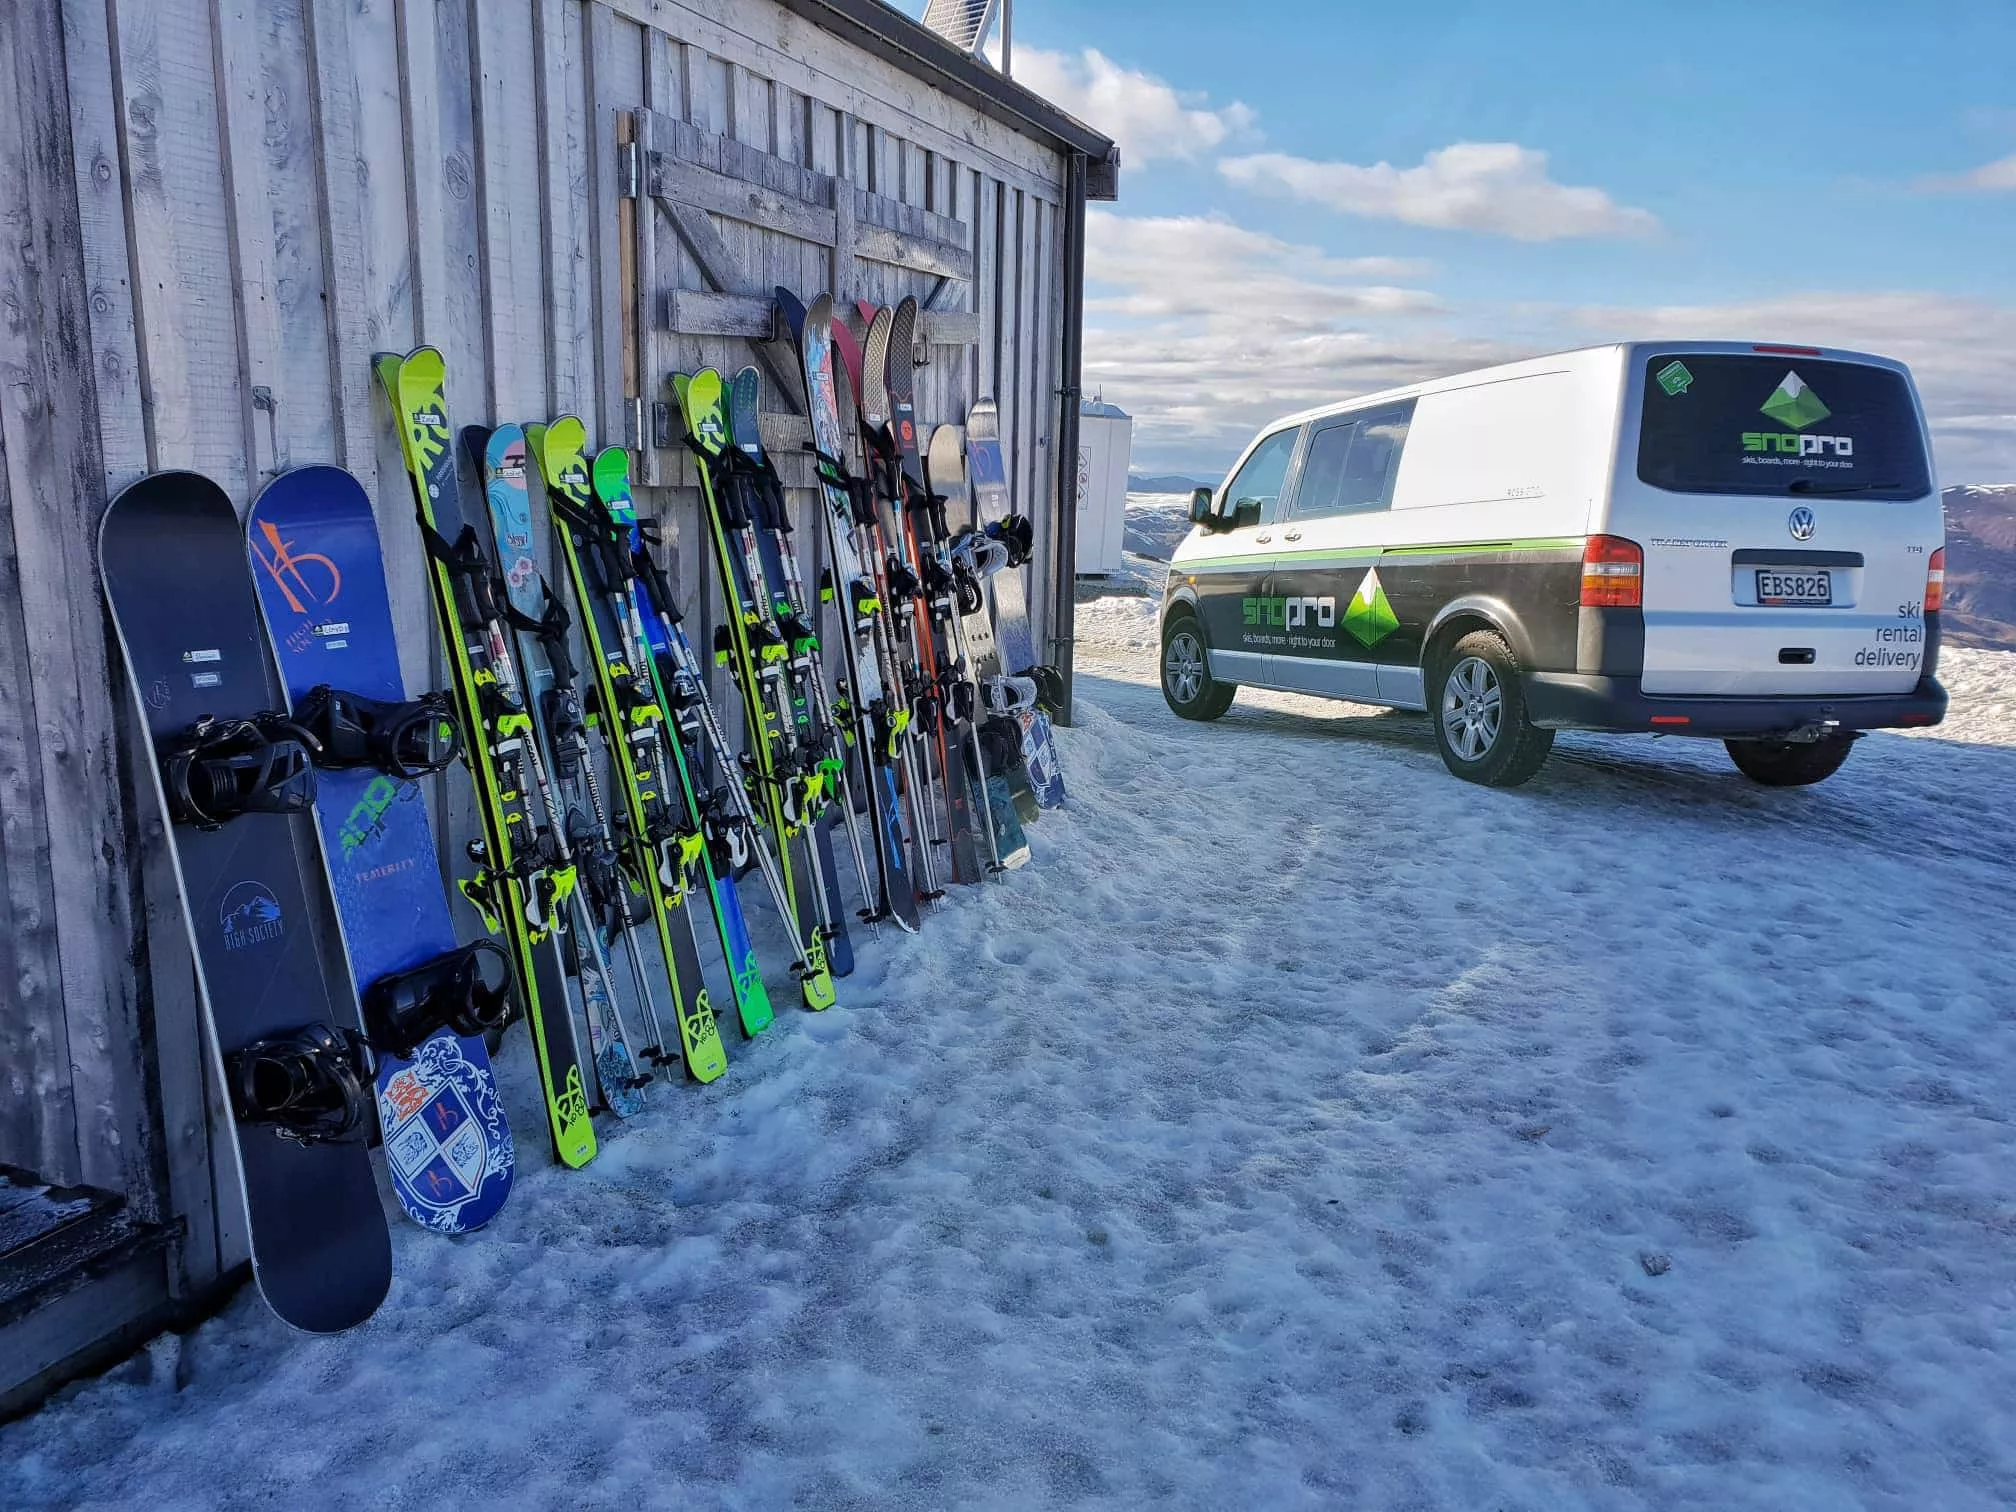 Snopro Ski Hire Wanaka in New Zealand, Australia and Oceania | Snowboarding,Skiing - Rated 0.9